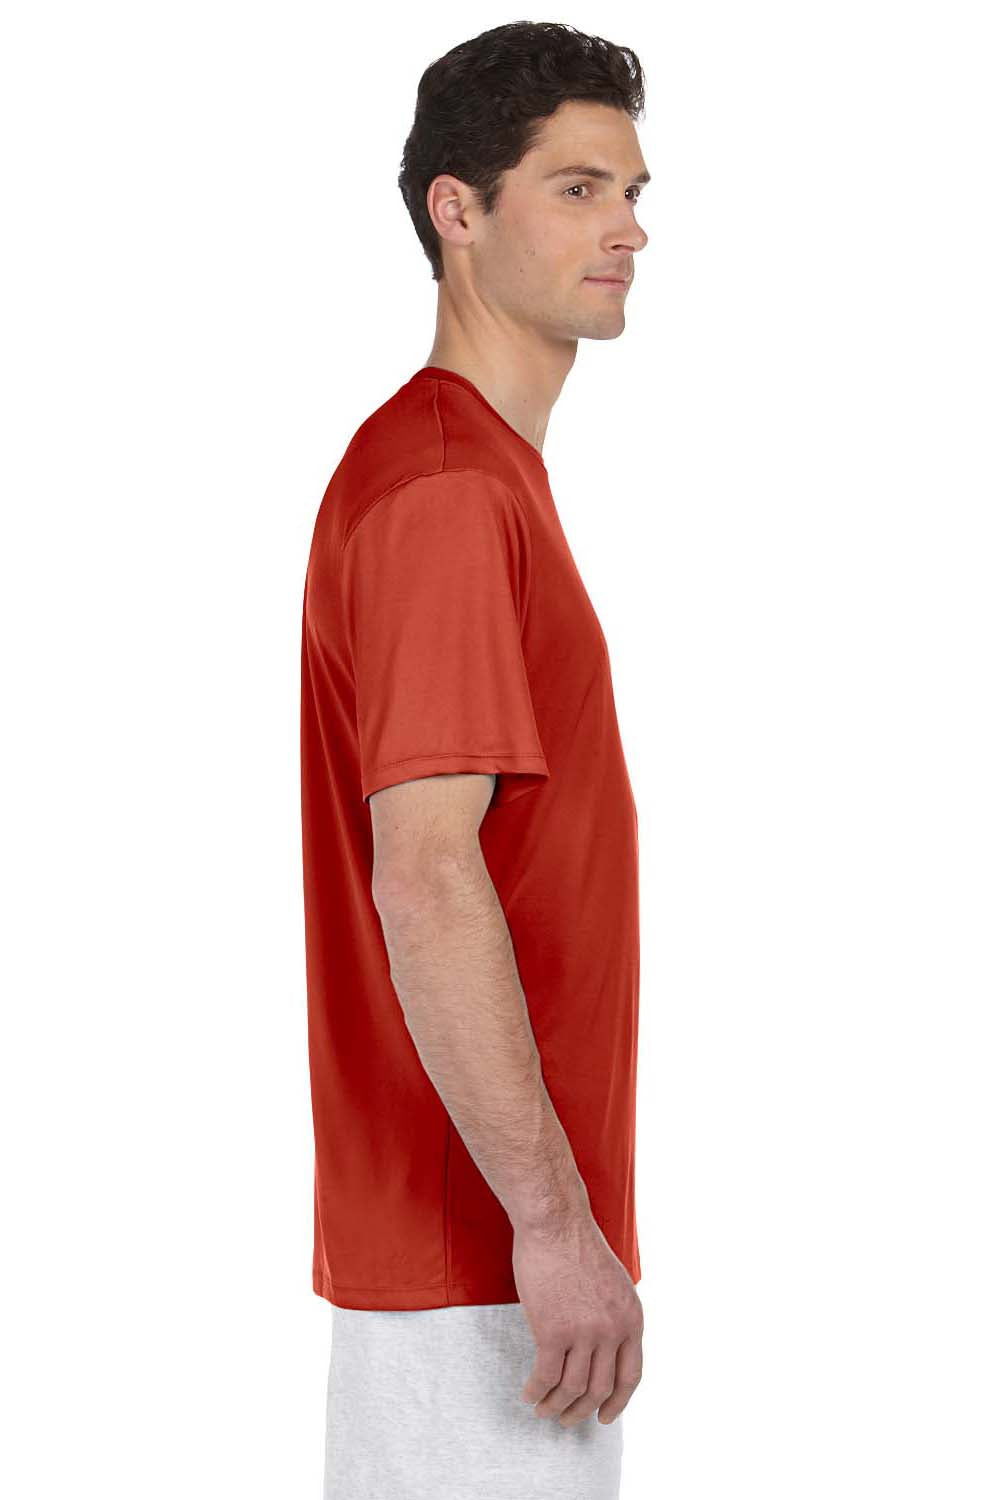 Hanes 4820 Mens Cool DRI FreshIQ Moisture Wicking Short Sleeve Crewneck T-Shirt Red Side